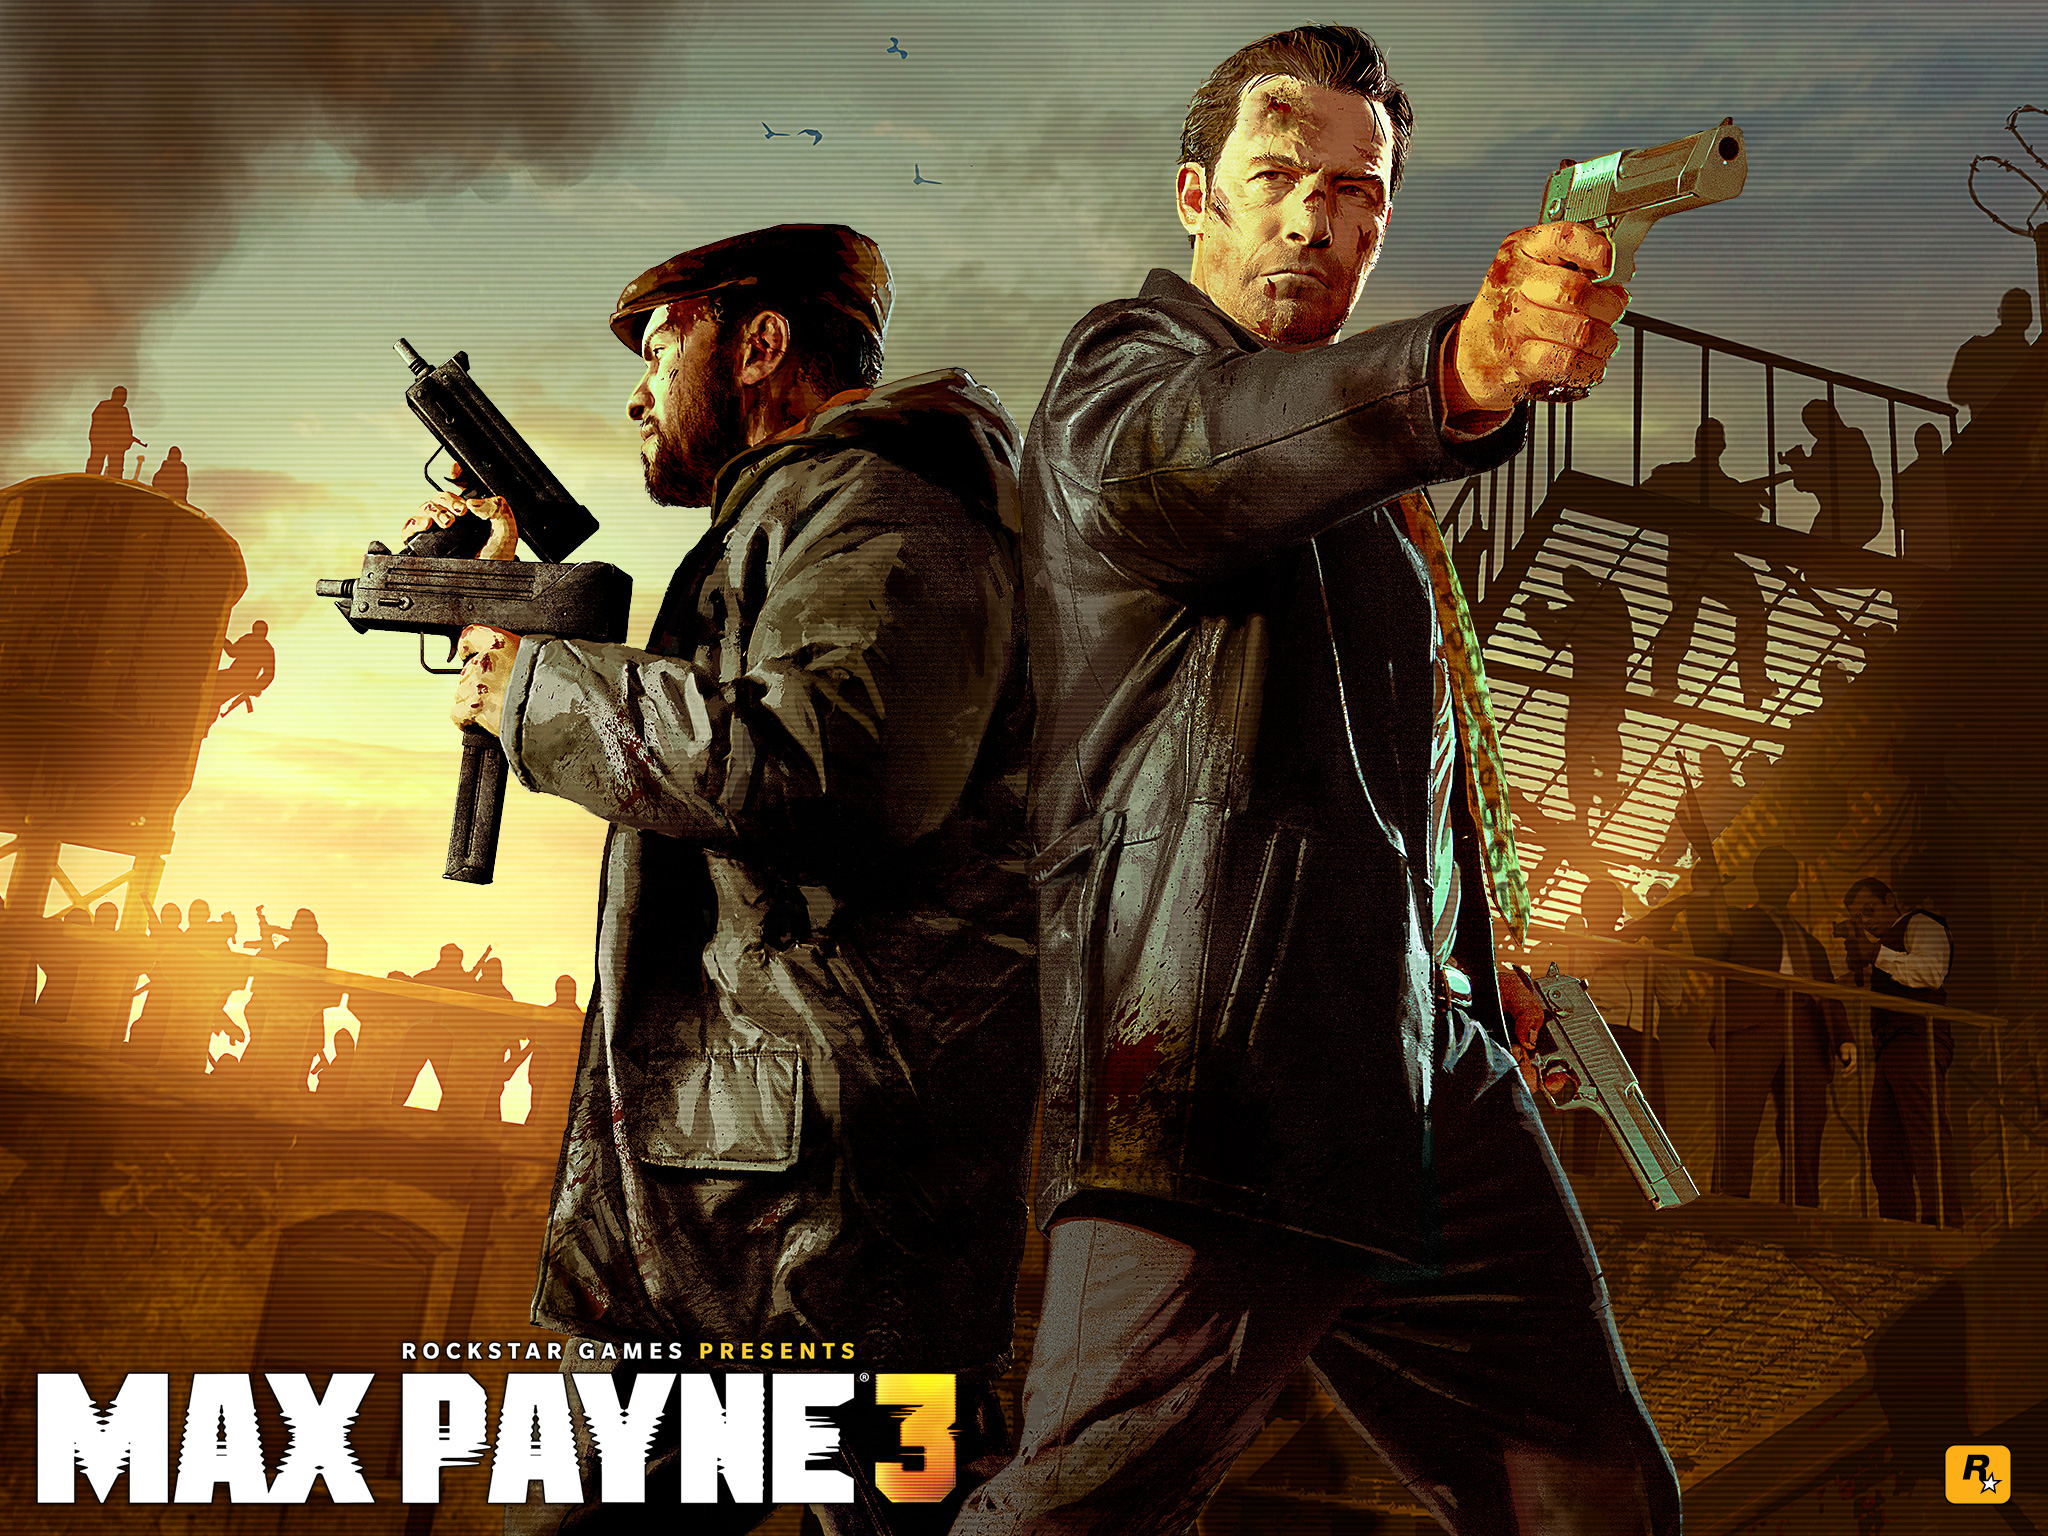 max payne 3 download pc game free full version